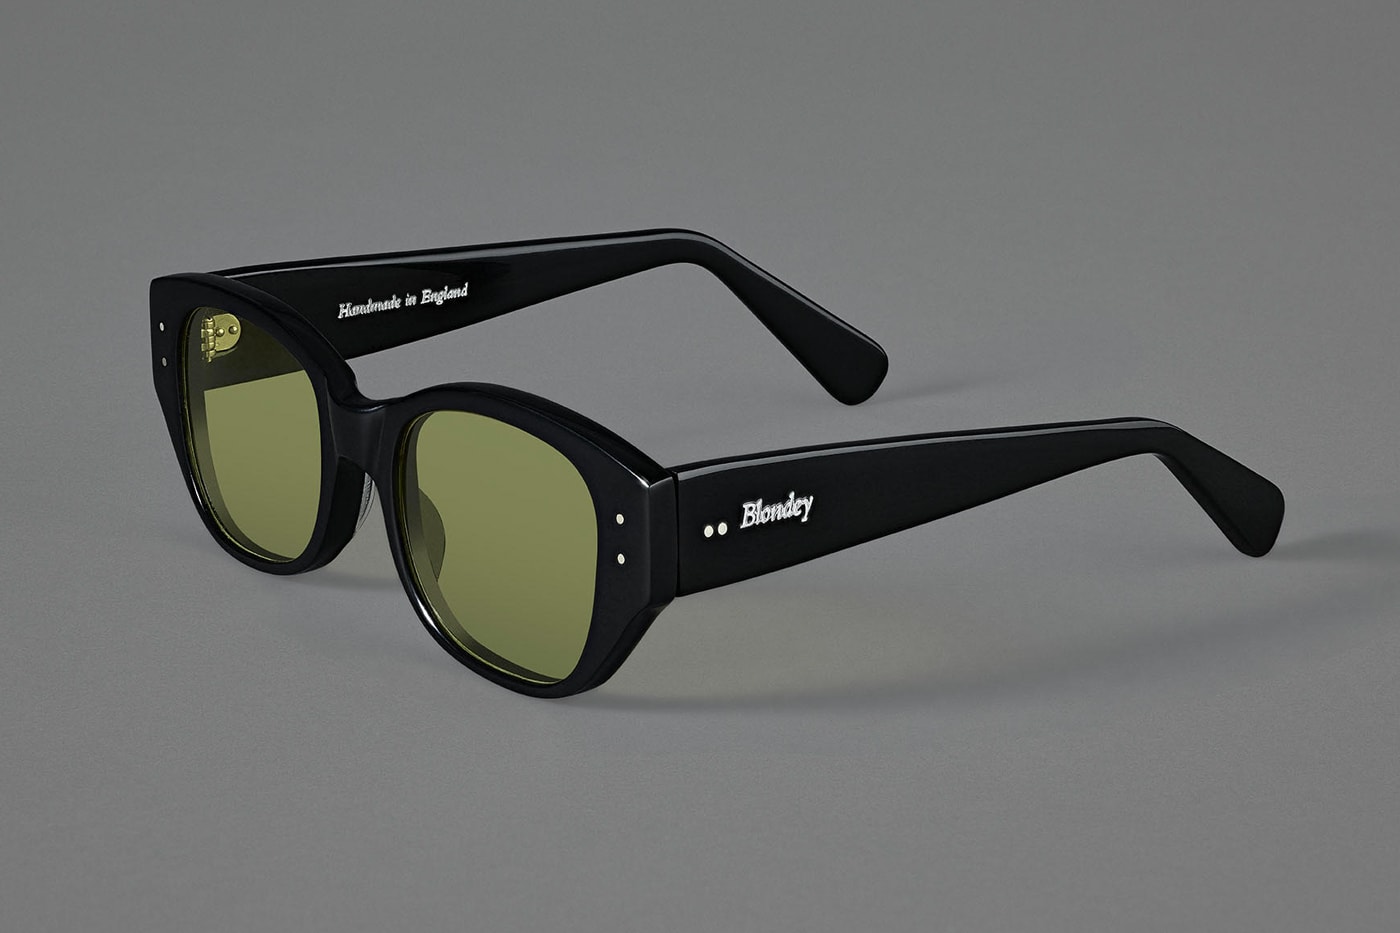 Blondey McCoy Blondey Sunglasses Release Polished Dark Havana Tortoise Champaign Black